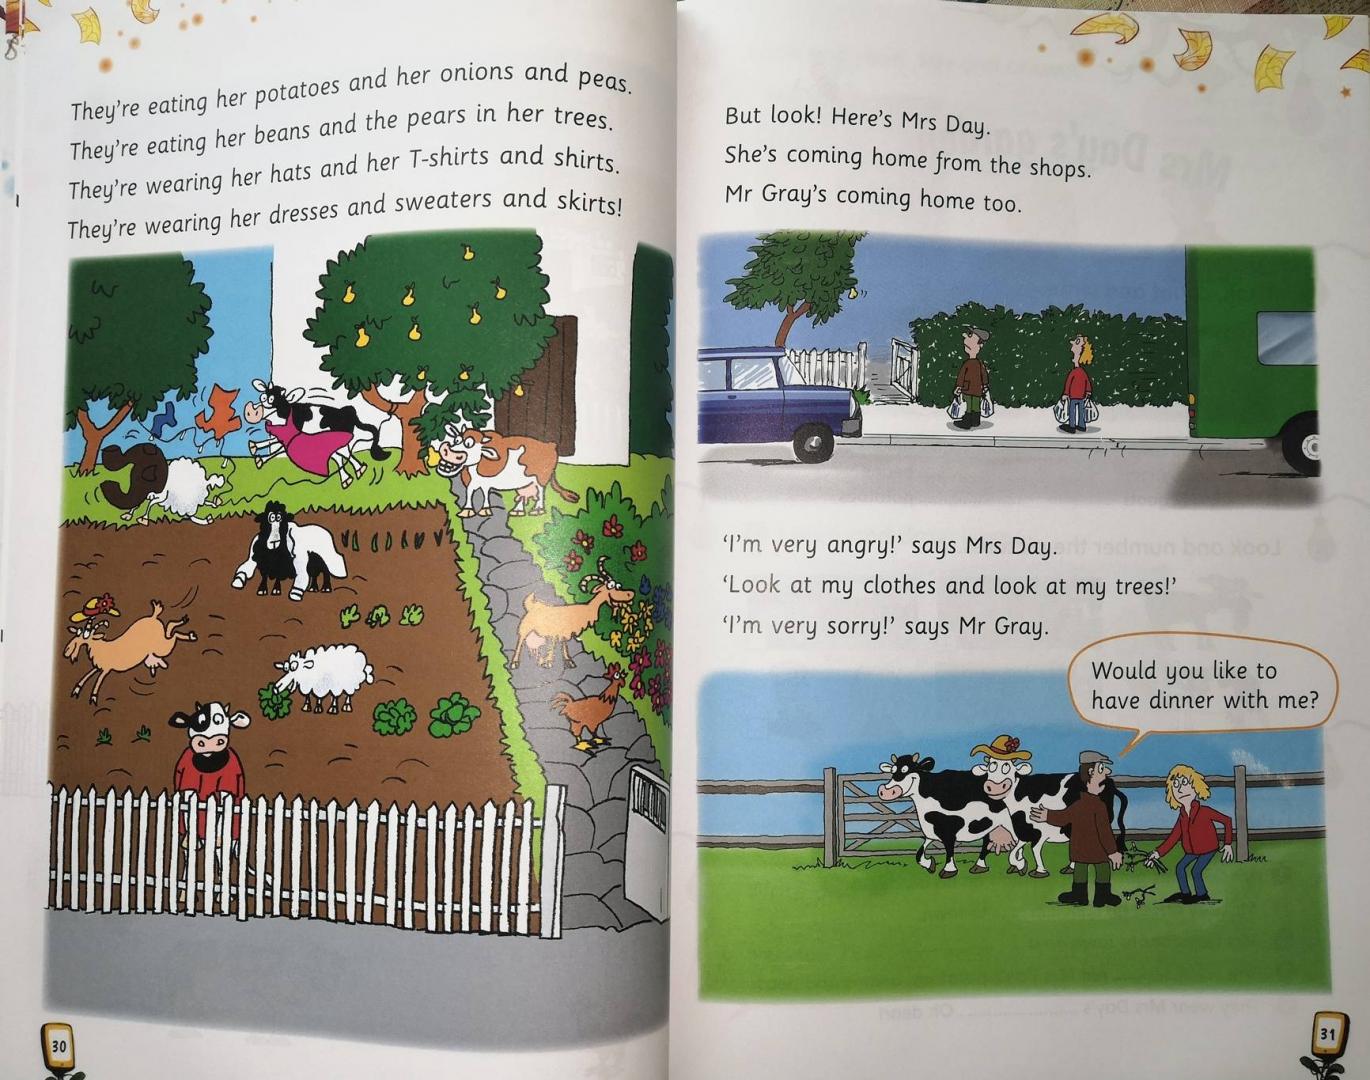 Home fun booklet. Гдз по английскому storyfun. Fun booklet 2. Storyfun 1 student's book стр 34 Cows ? Sheeps ? Goats. Truck storyfun for Starters.